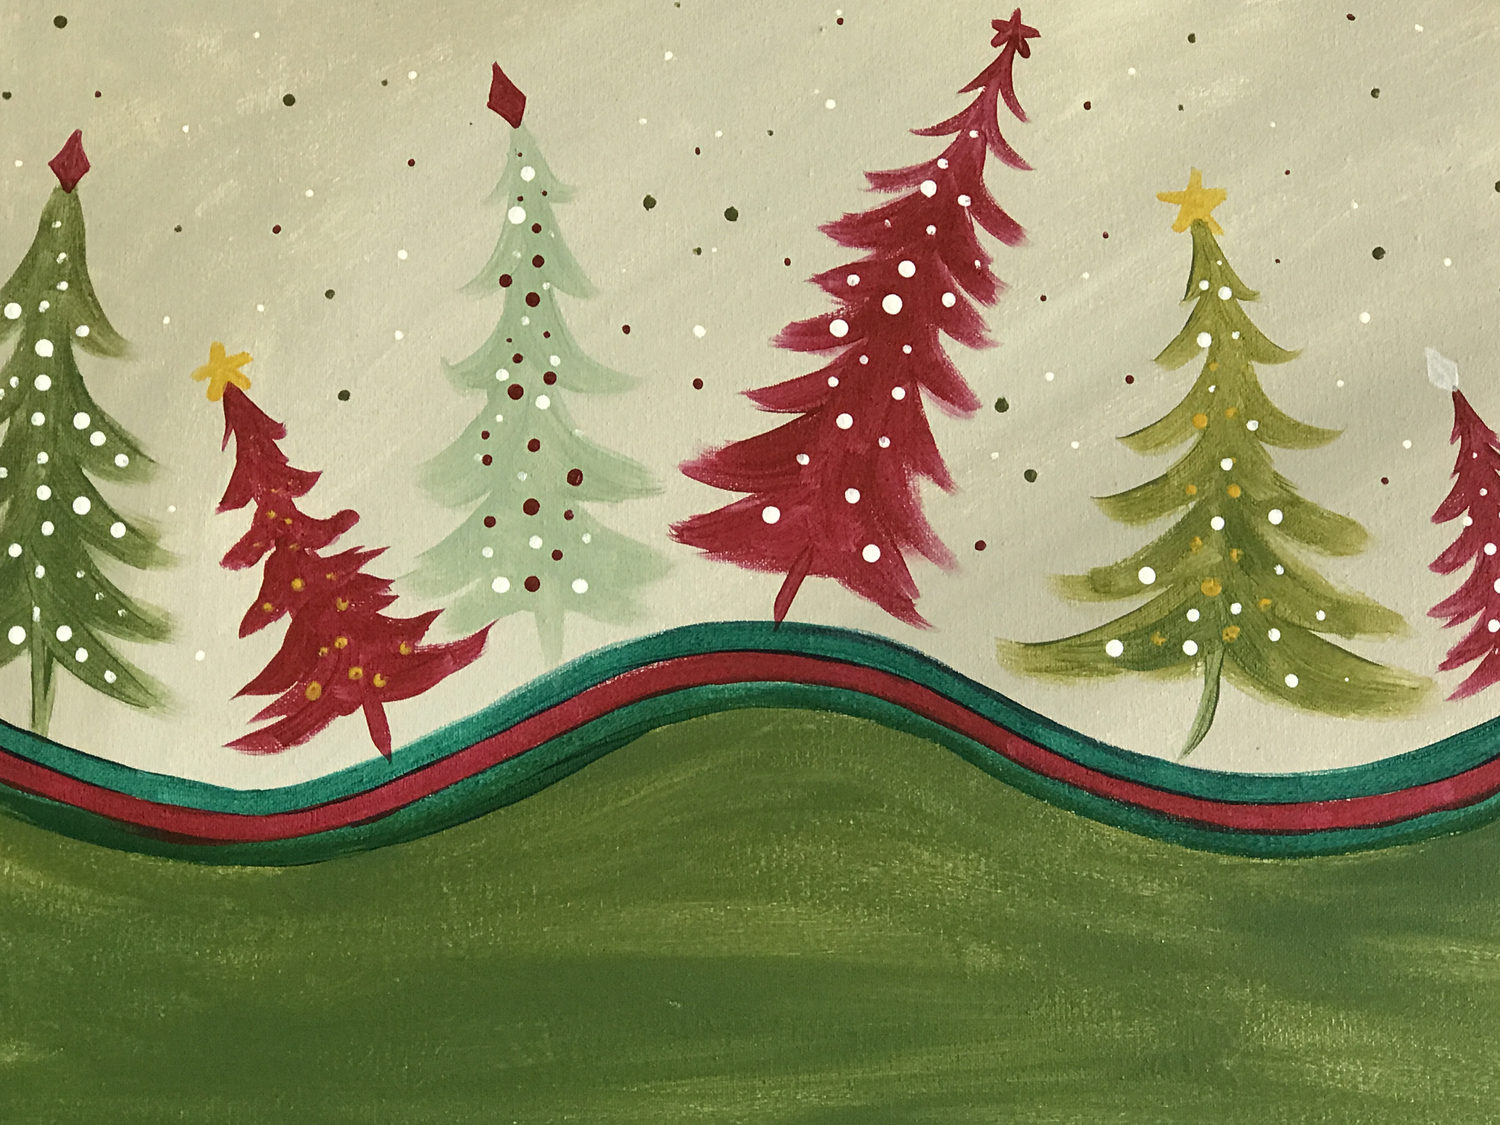 In Studio – Christmas Trees